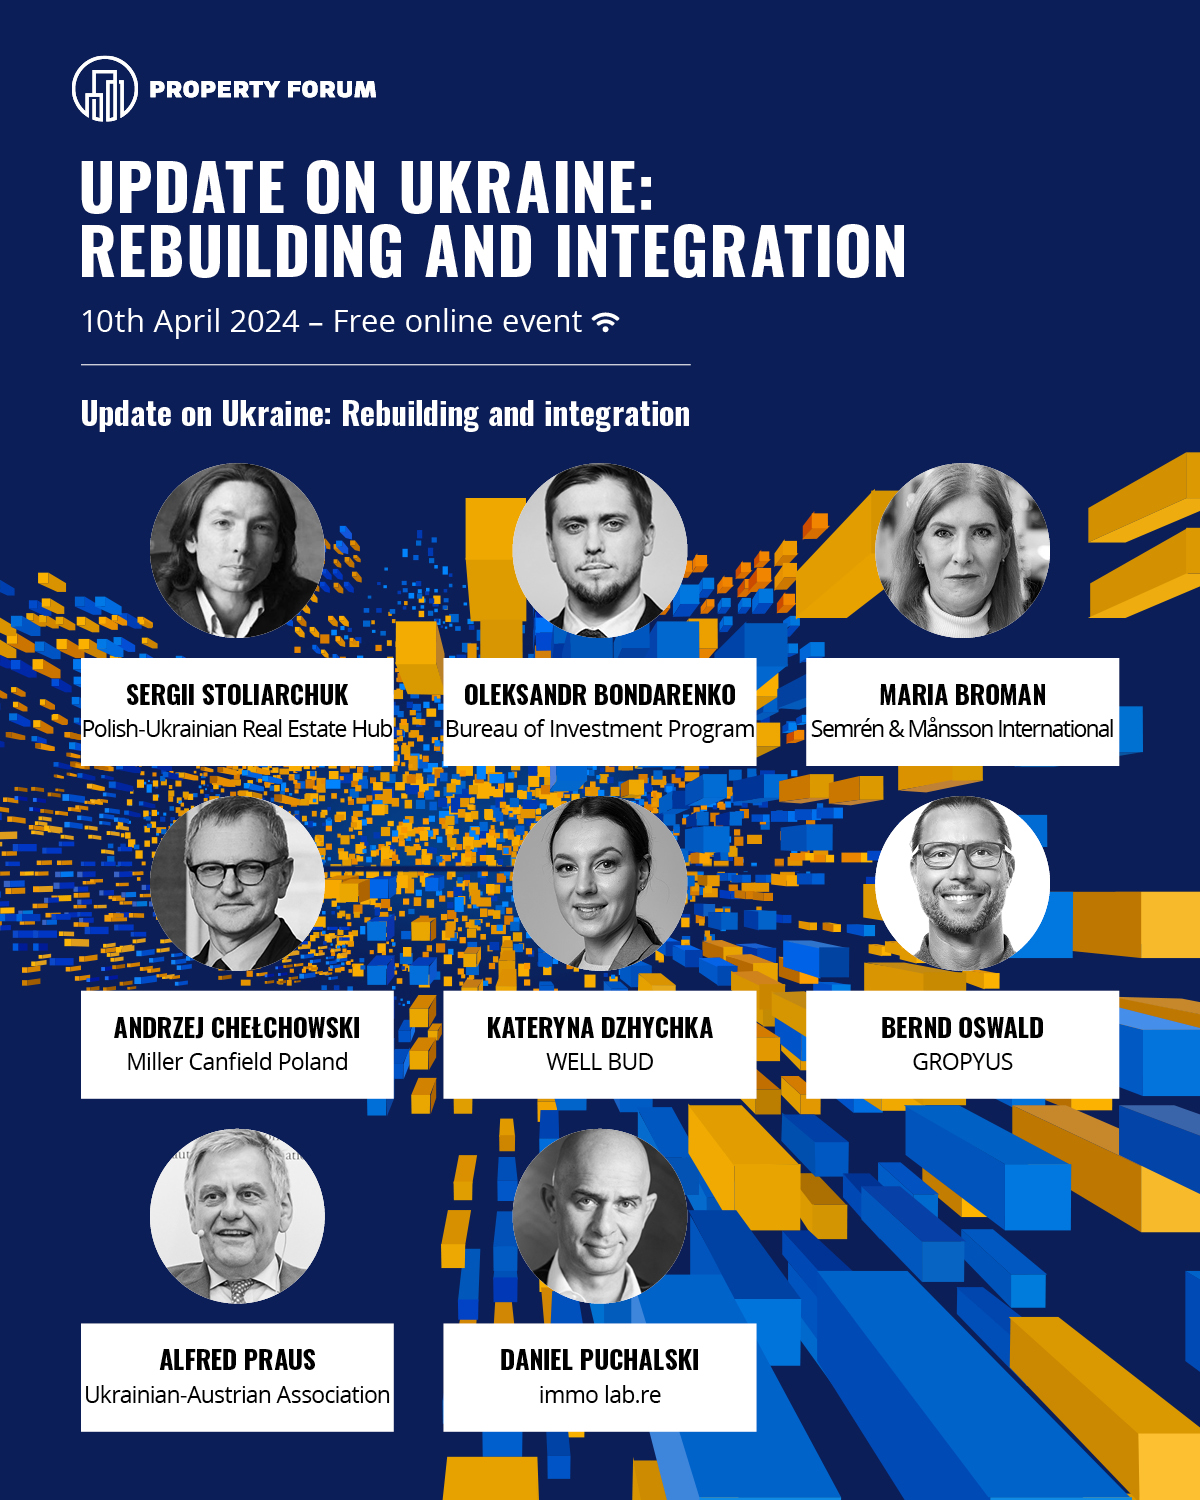 UPDATE ON UKRAINE: REBUILDING AND INTEGRATION